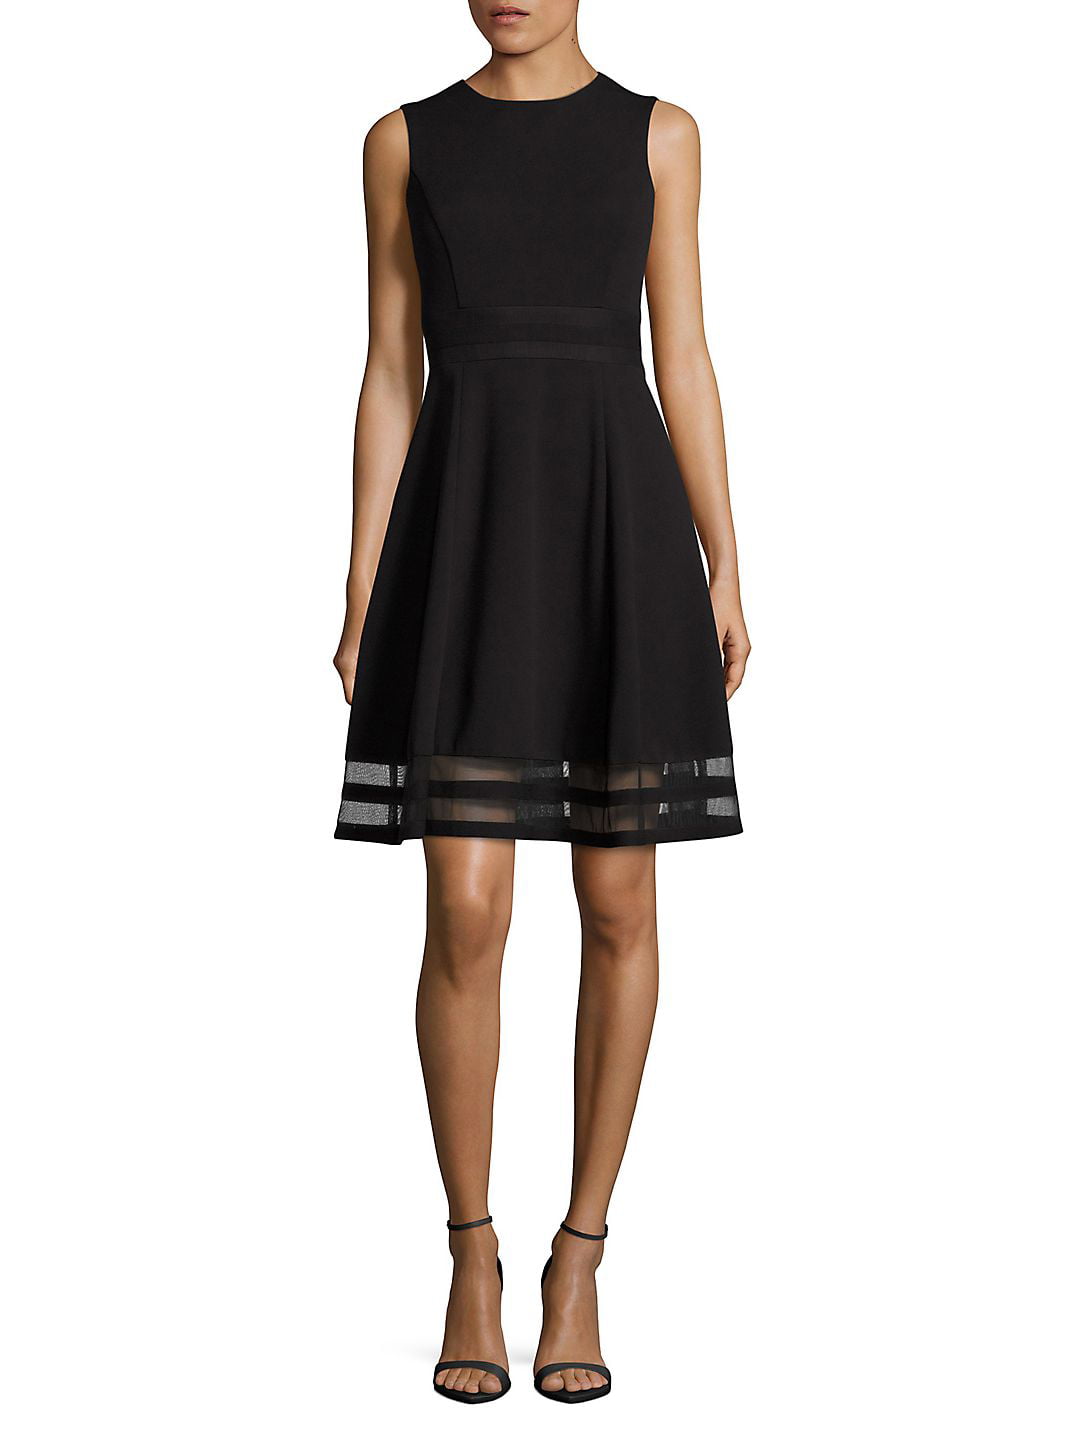 Calvin Klein Womens Petites Illusion Fit & Flare Party Dress - Walmart.com